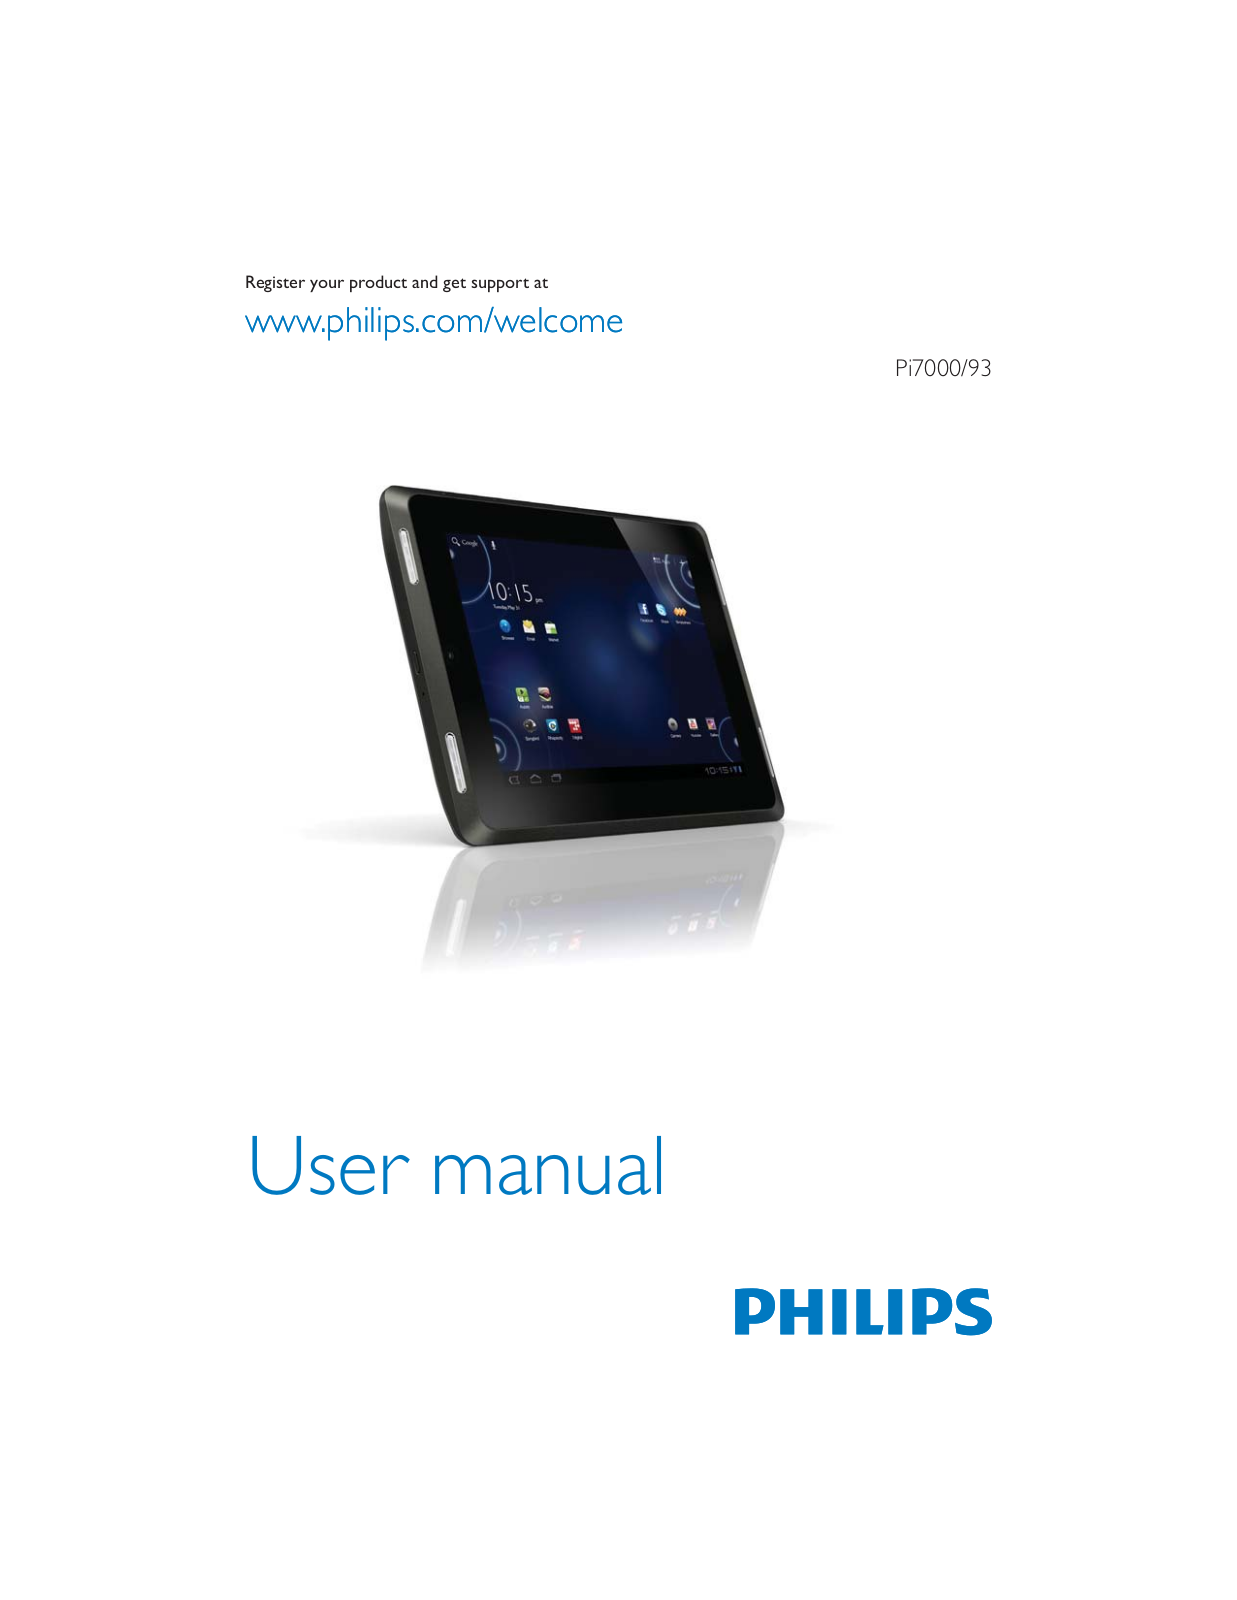 Philips PI7000-93 User Manual